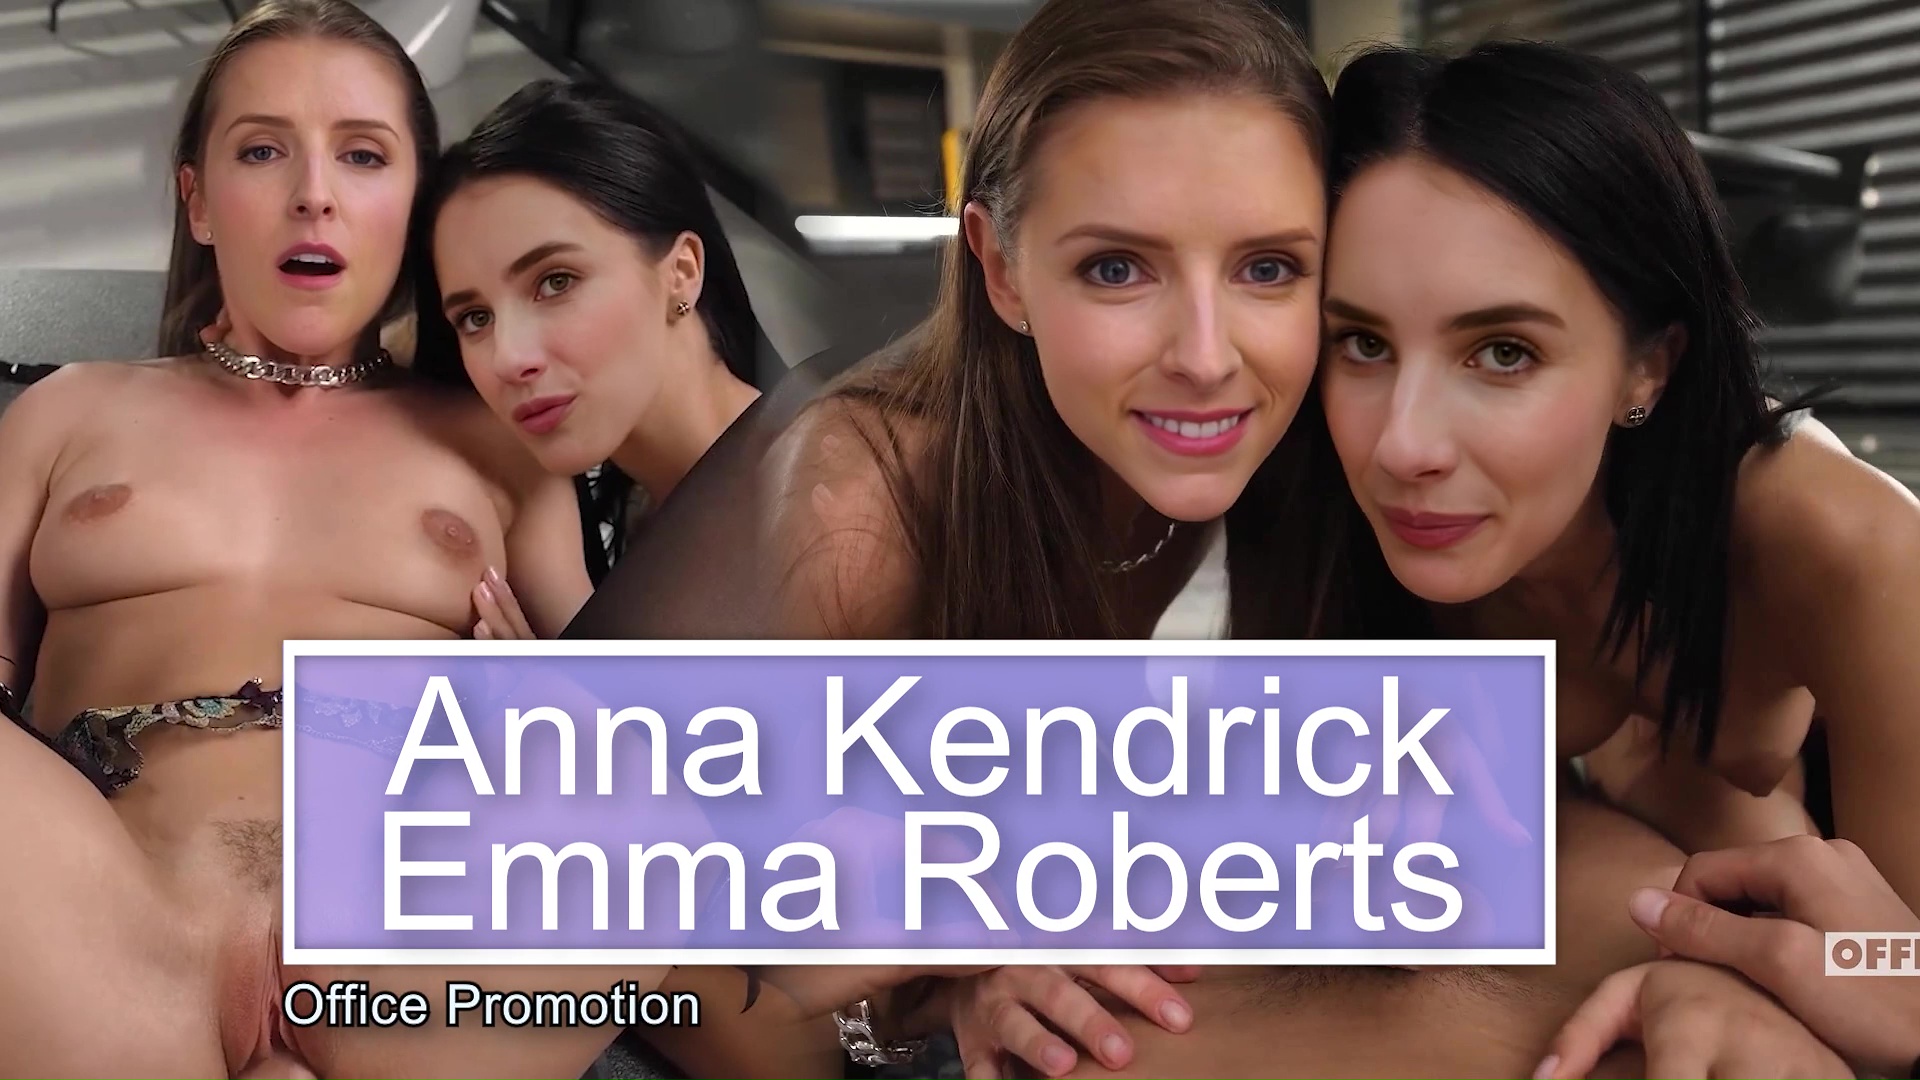 Anna Kendrick, Emma Roberts - Office Promotion - Trailer